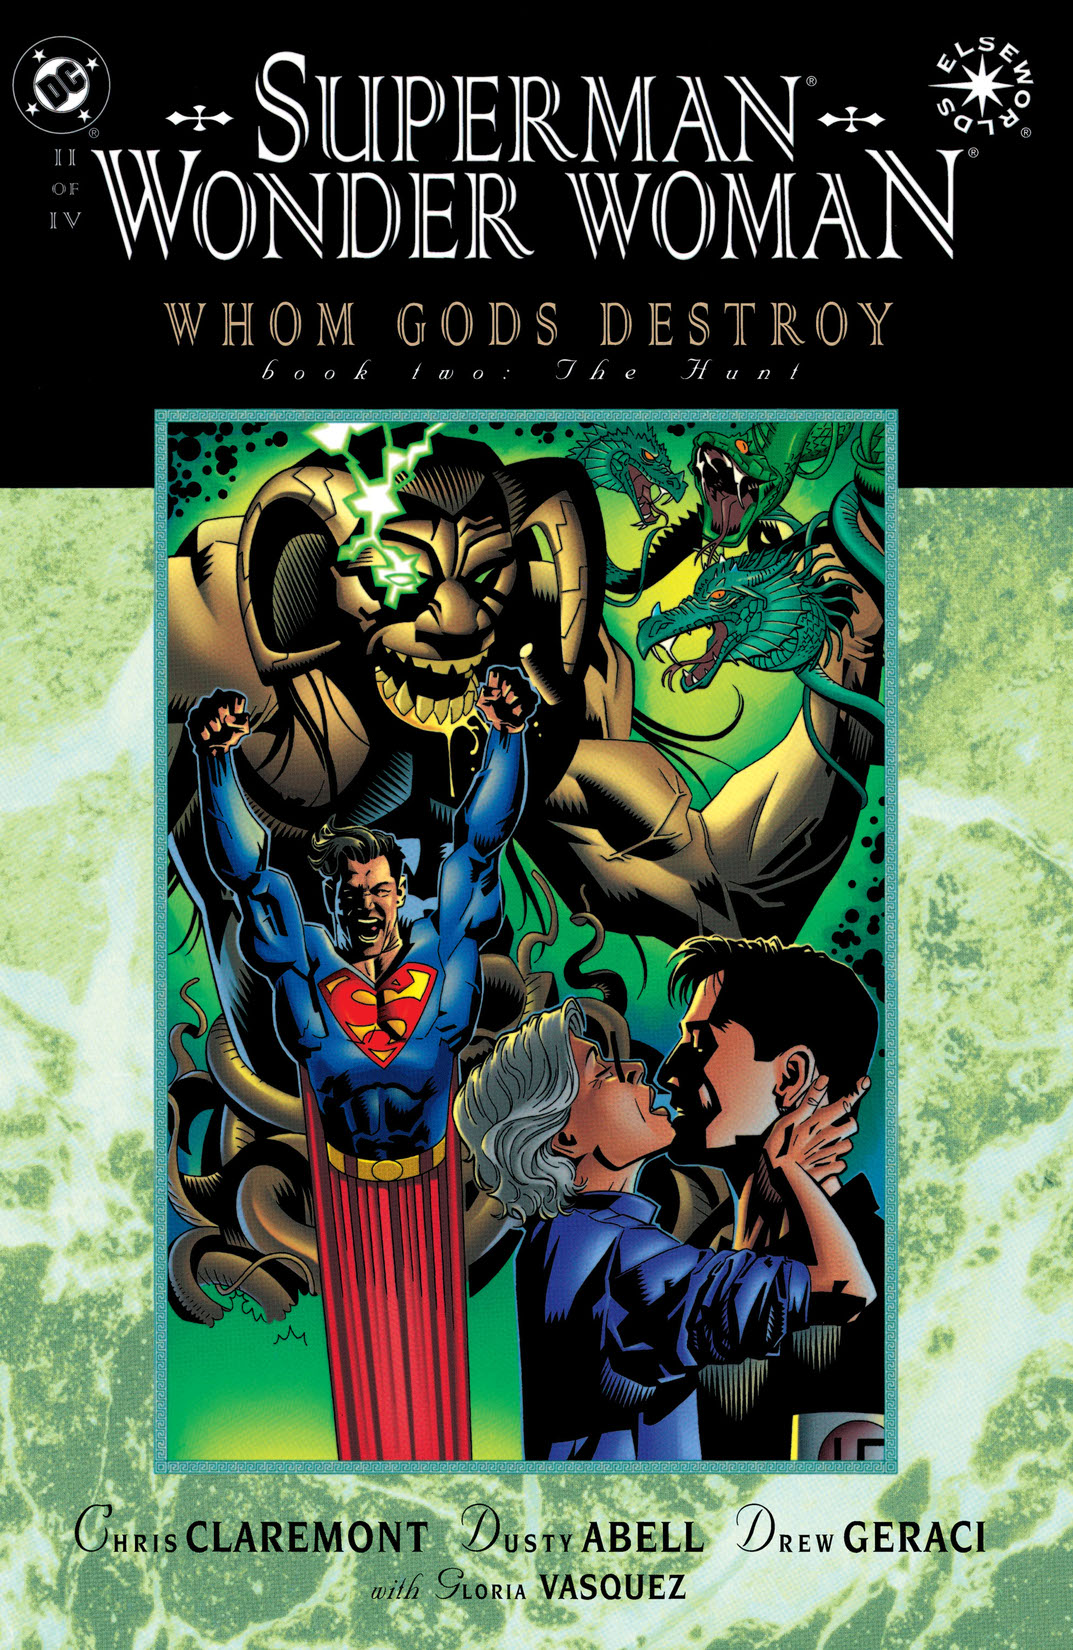 Superman/Wonder Woman: Whom Gods Destroy #2 preview images